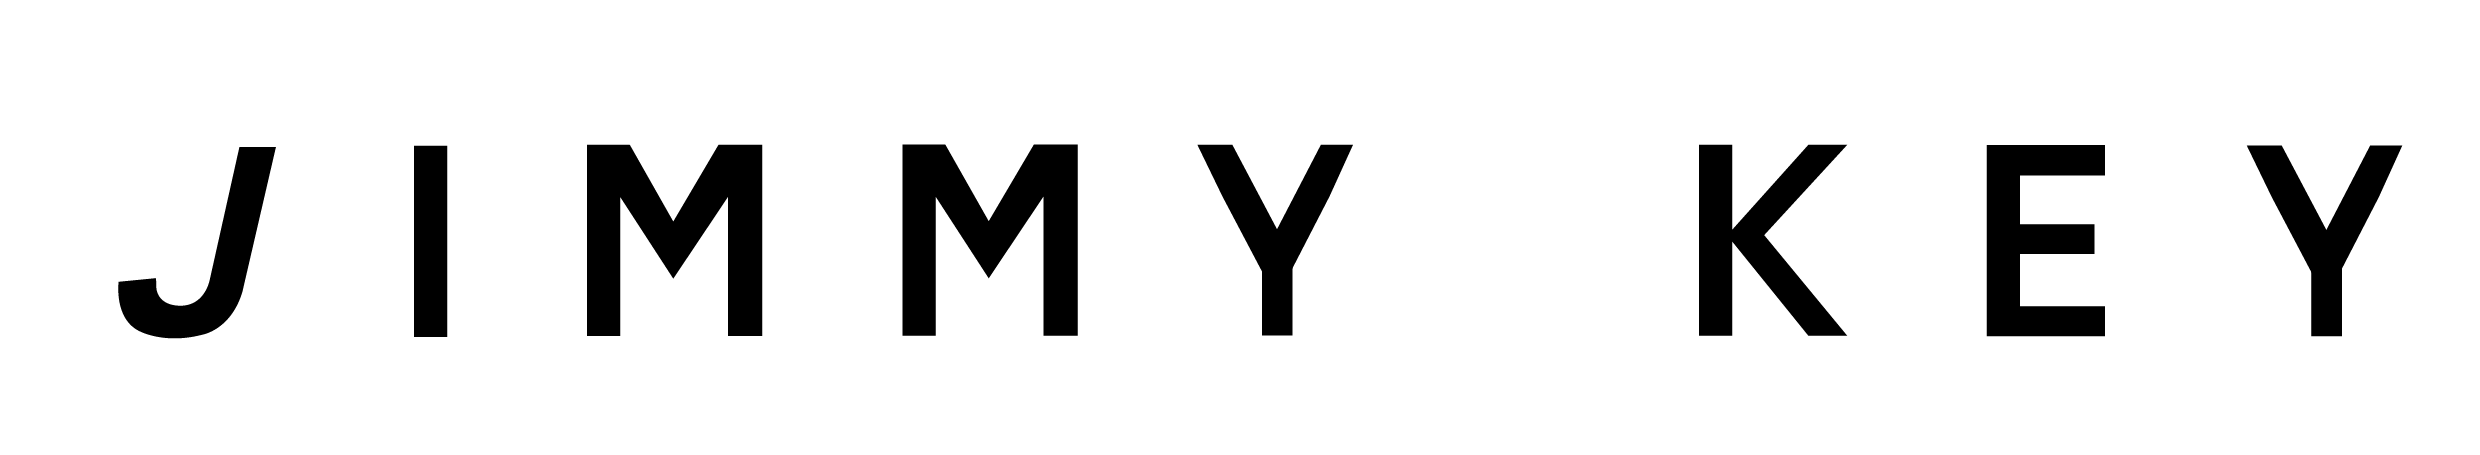 Jimmy Key Logo